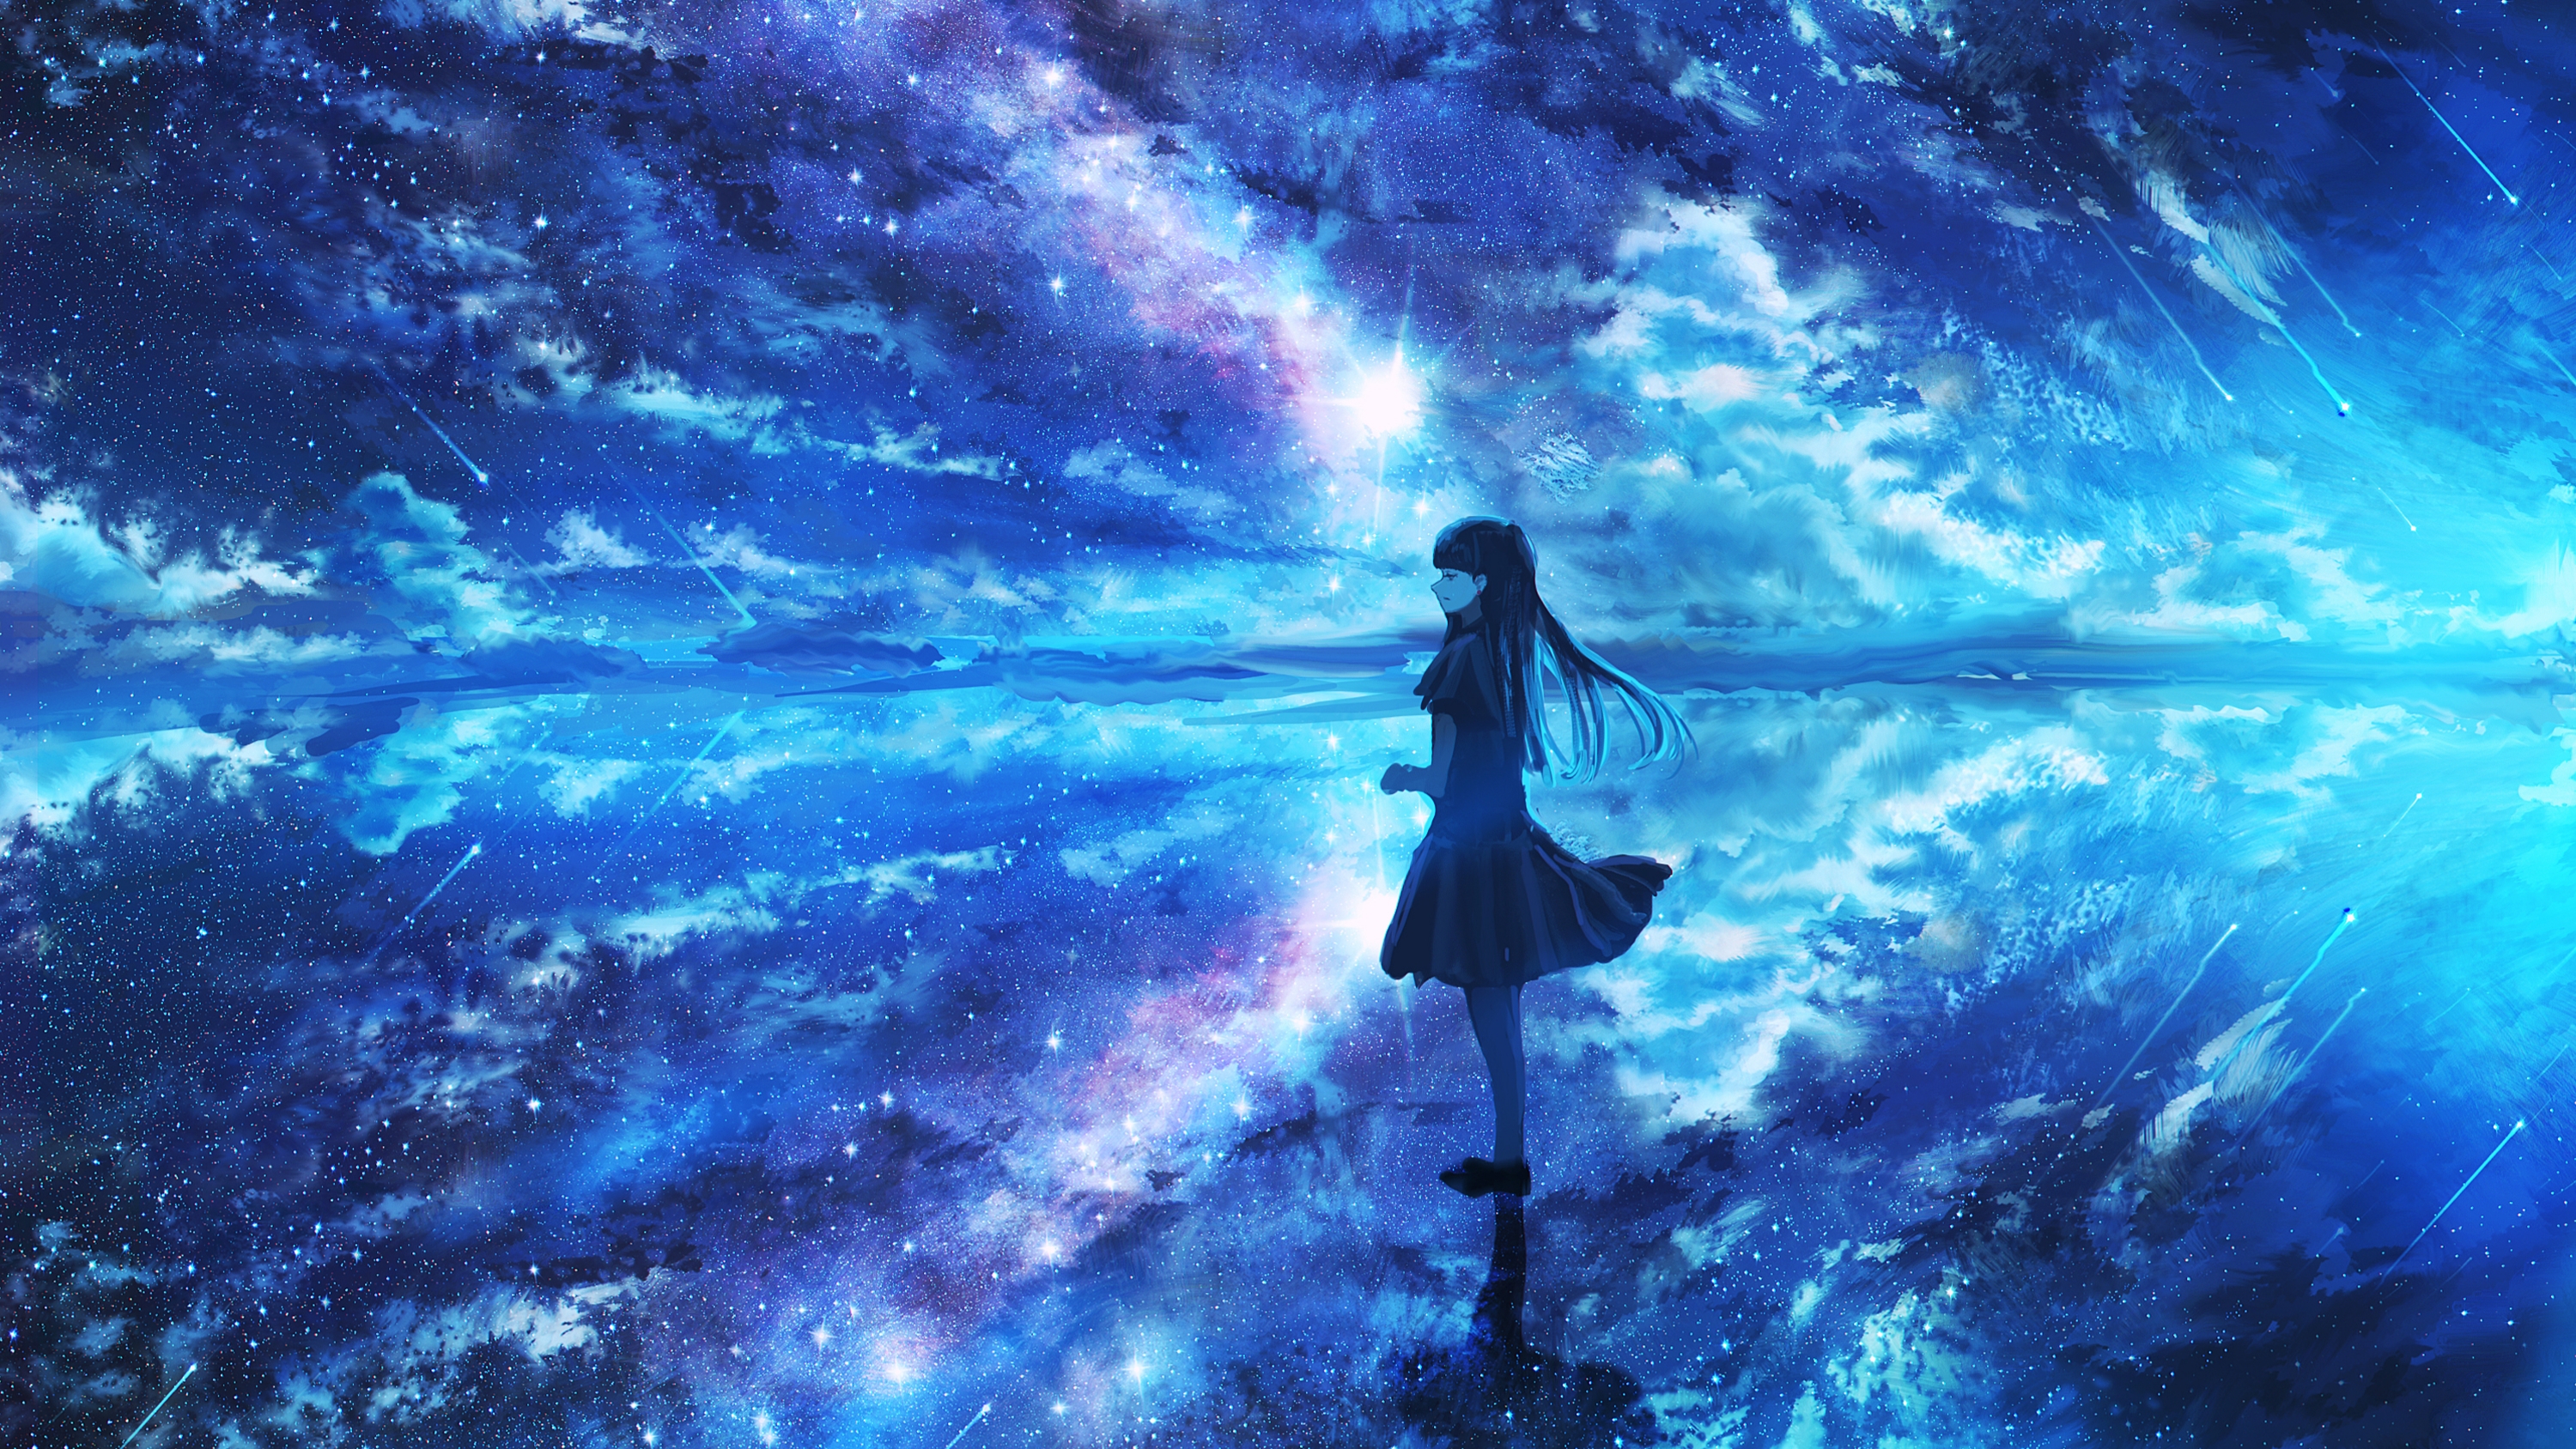 Anime Anime Girls Women Fantasy Girl Digital Art Artwork Illustration Fantasy Art Galaxy Universe St 3000x1688